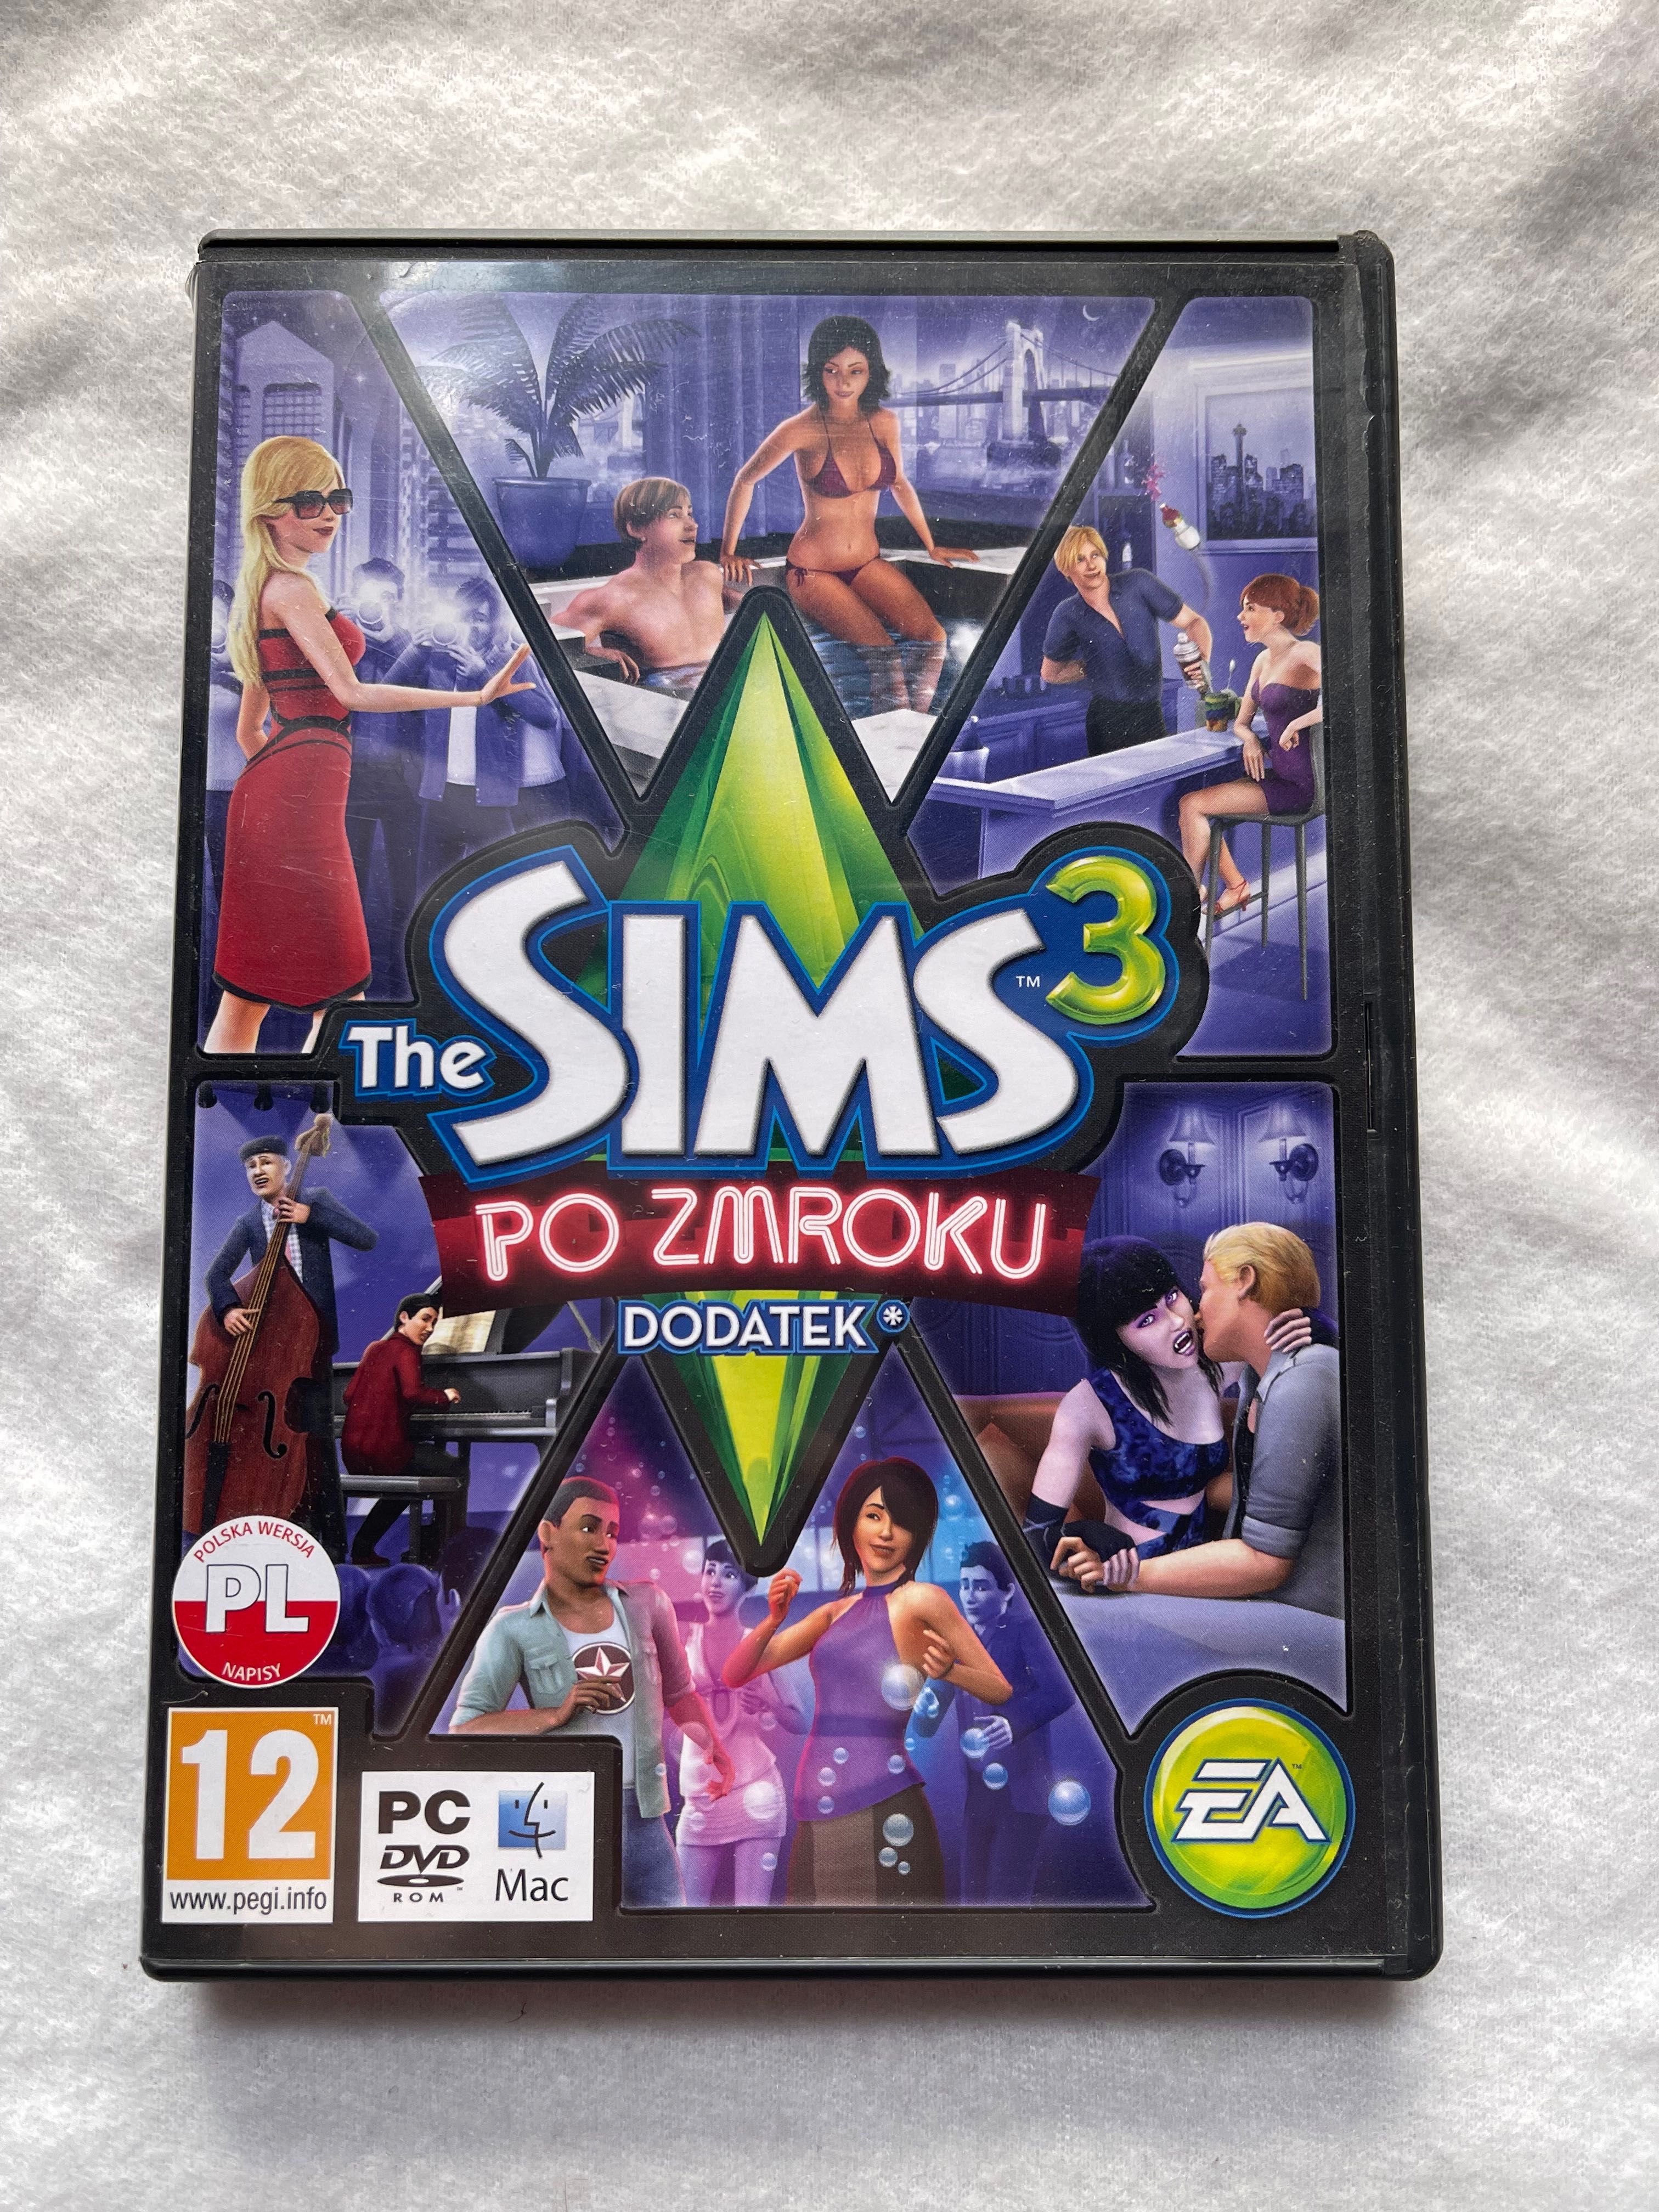 The Sims 3 - po zmroku